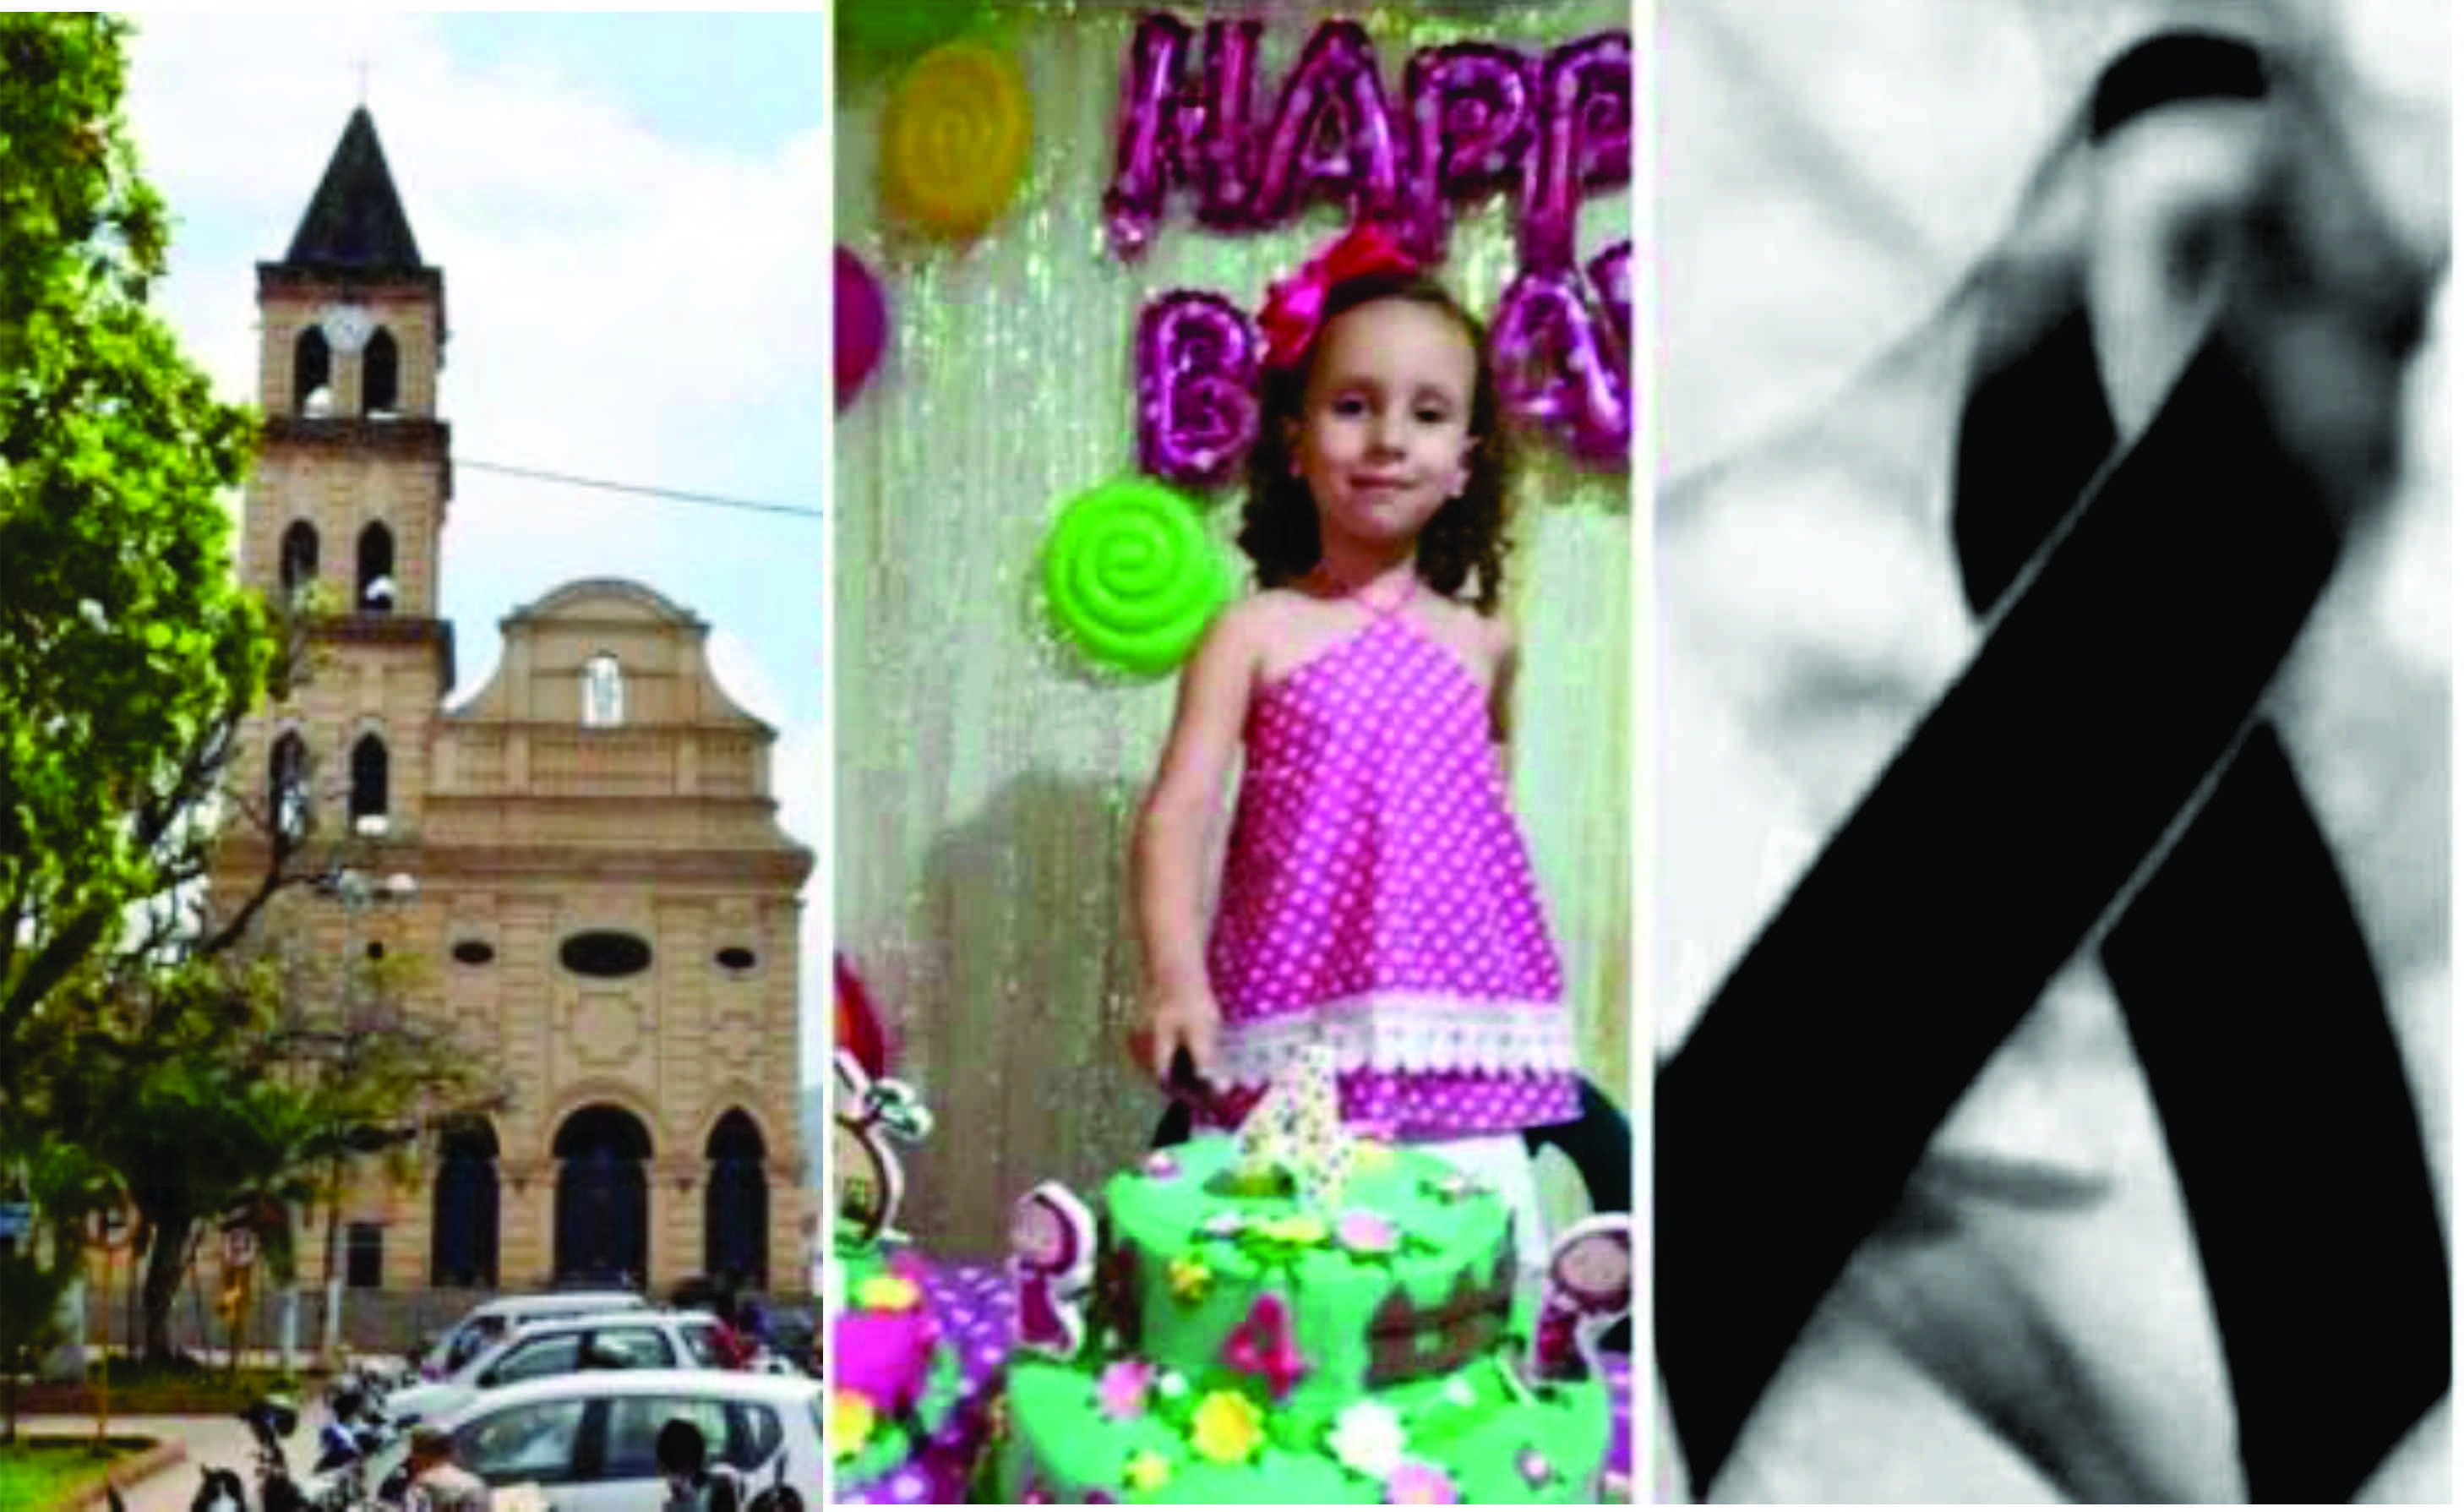  Falleció niña de 4 años, víctima de golpes y abuso sexual en Garzón, Huila.